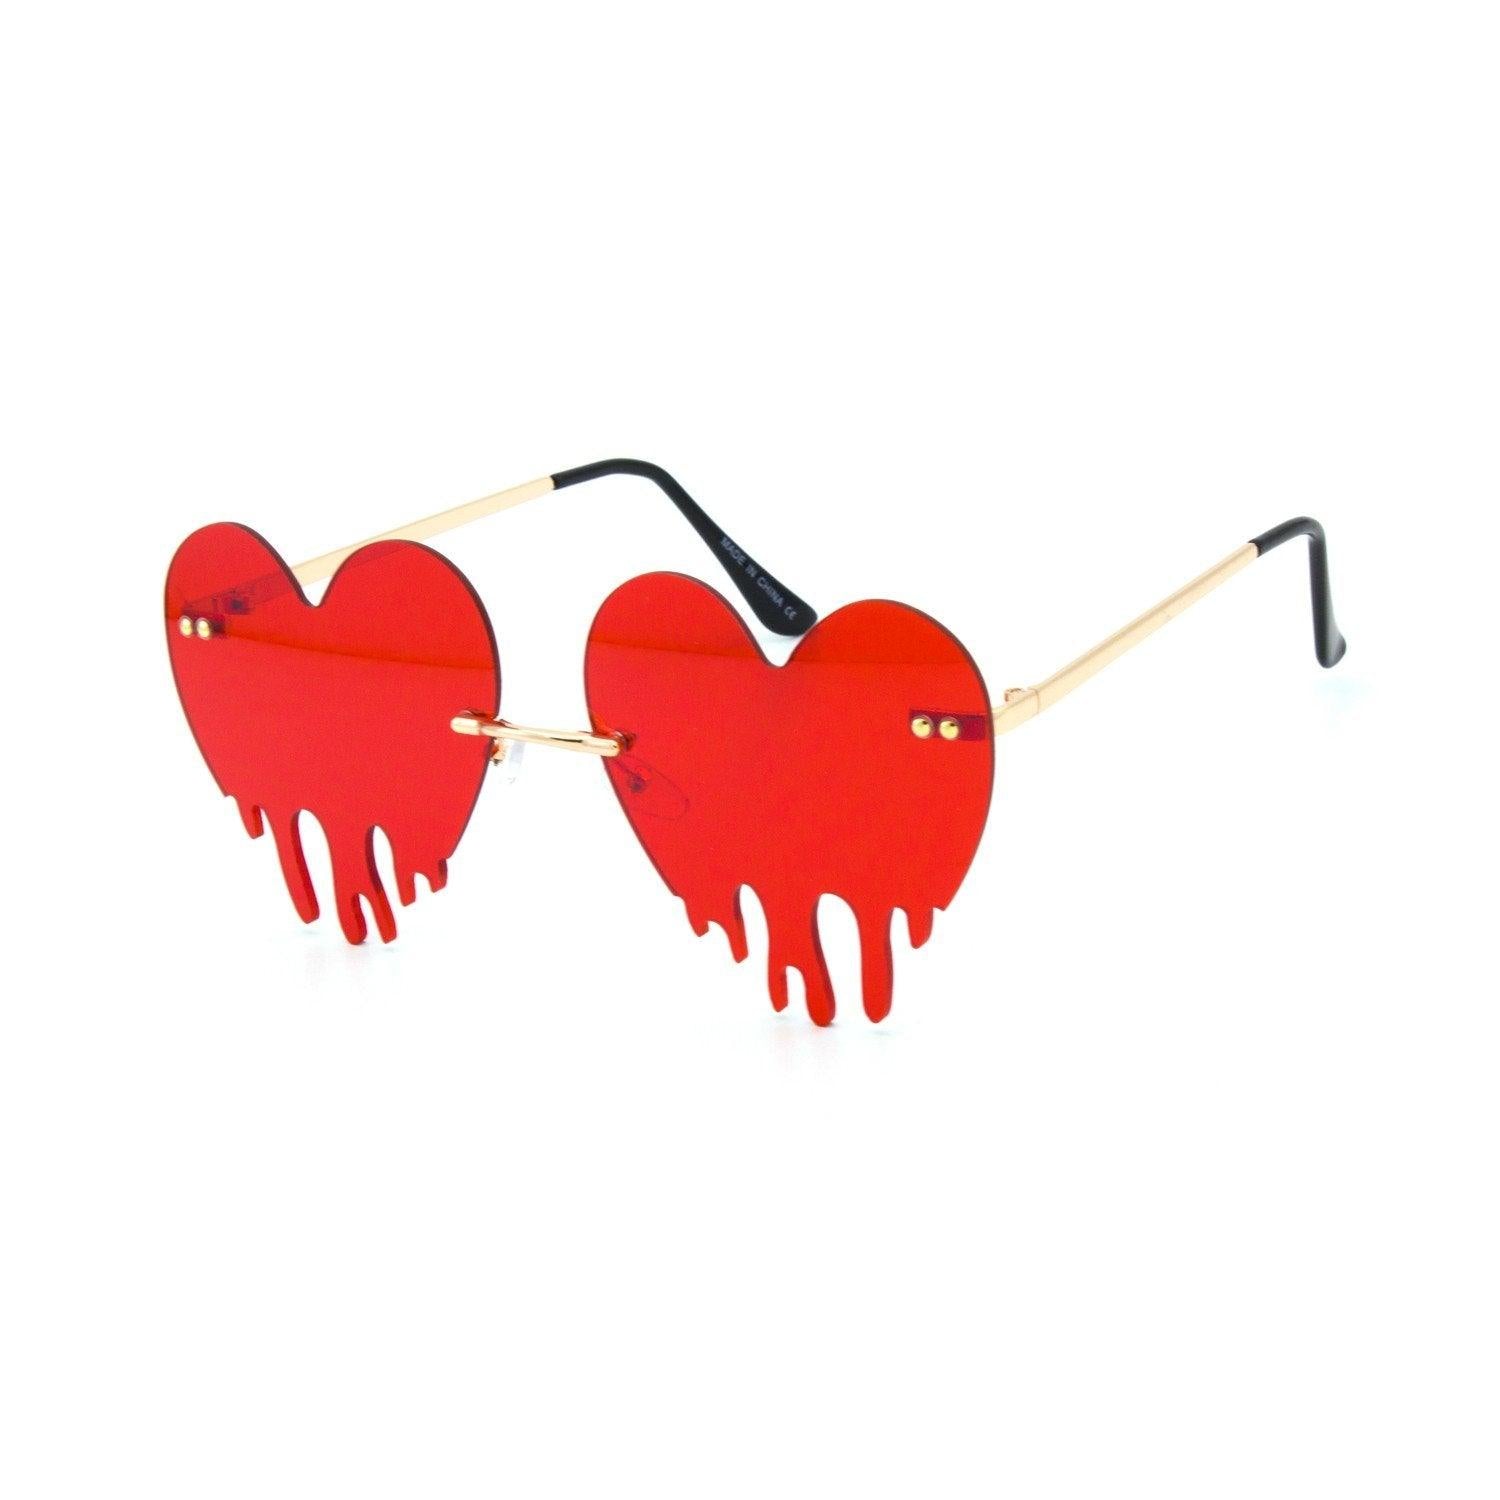 "Melting Hearts" Heart Shape Sunglasses - Mint Leafe Boutique 